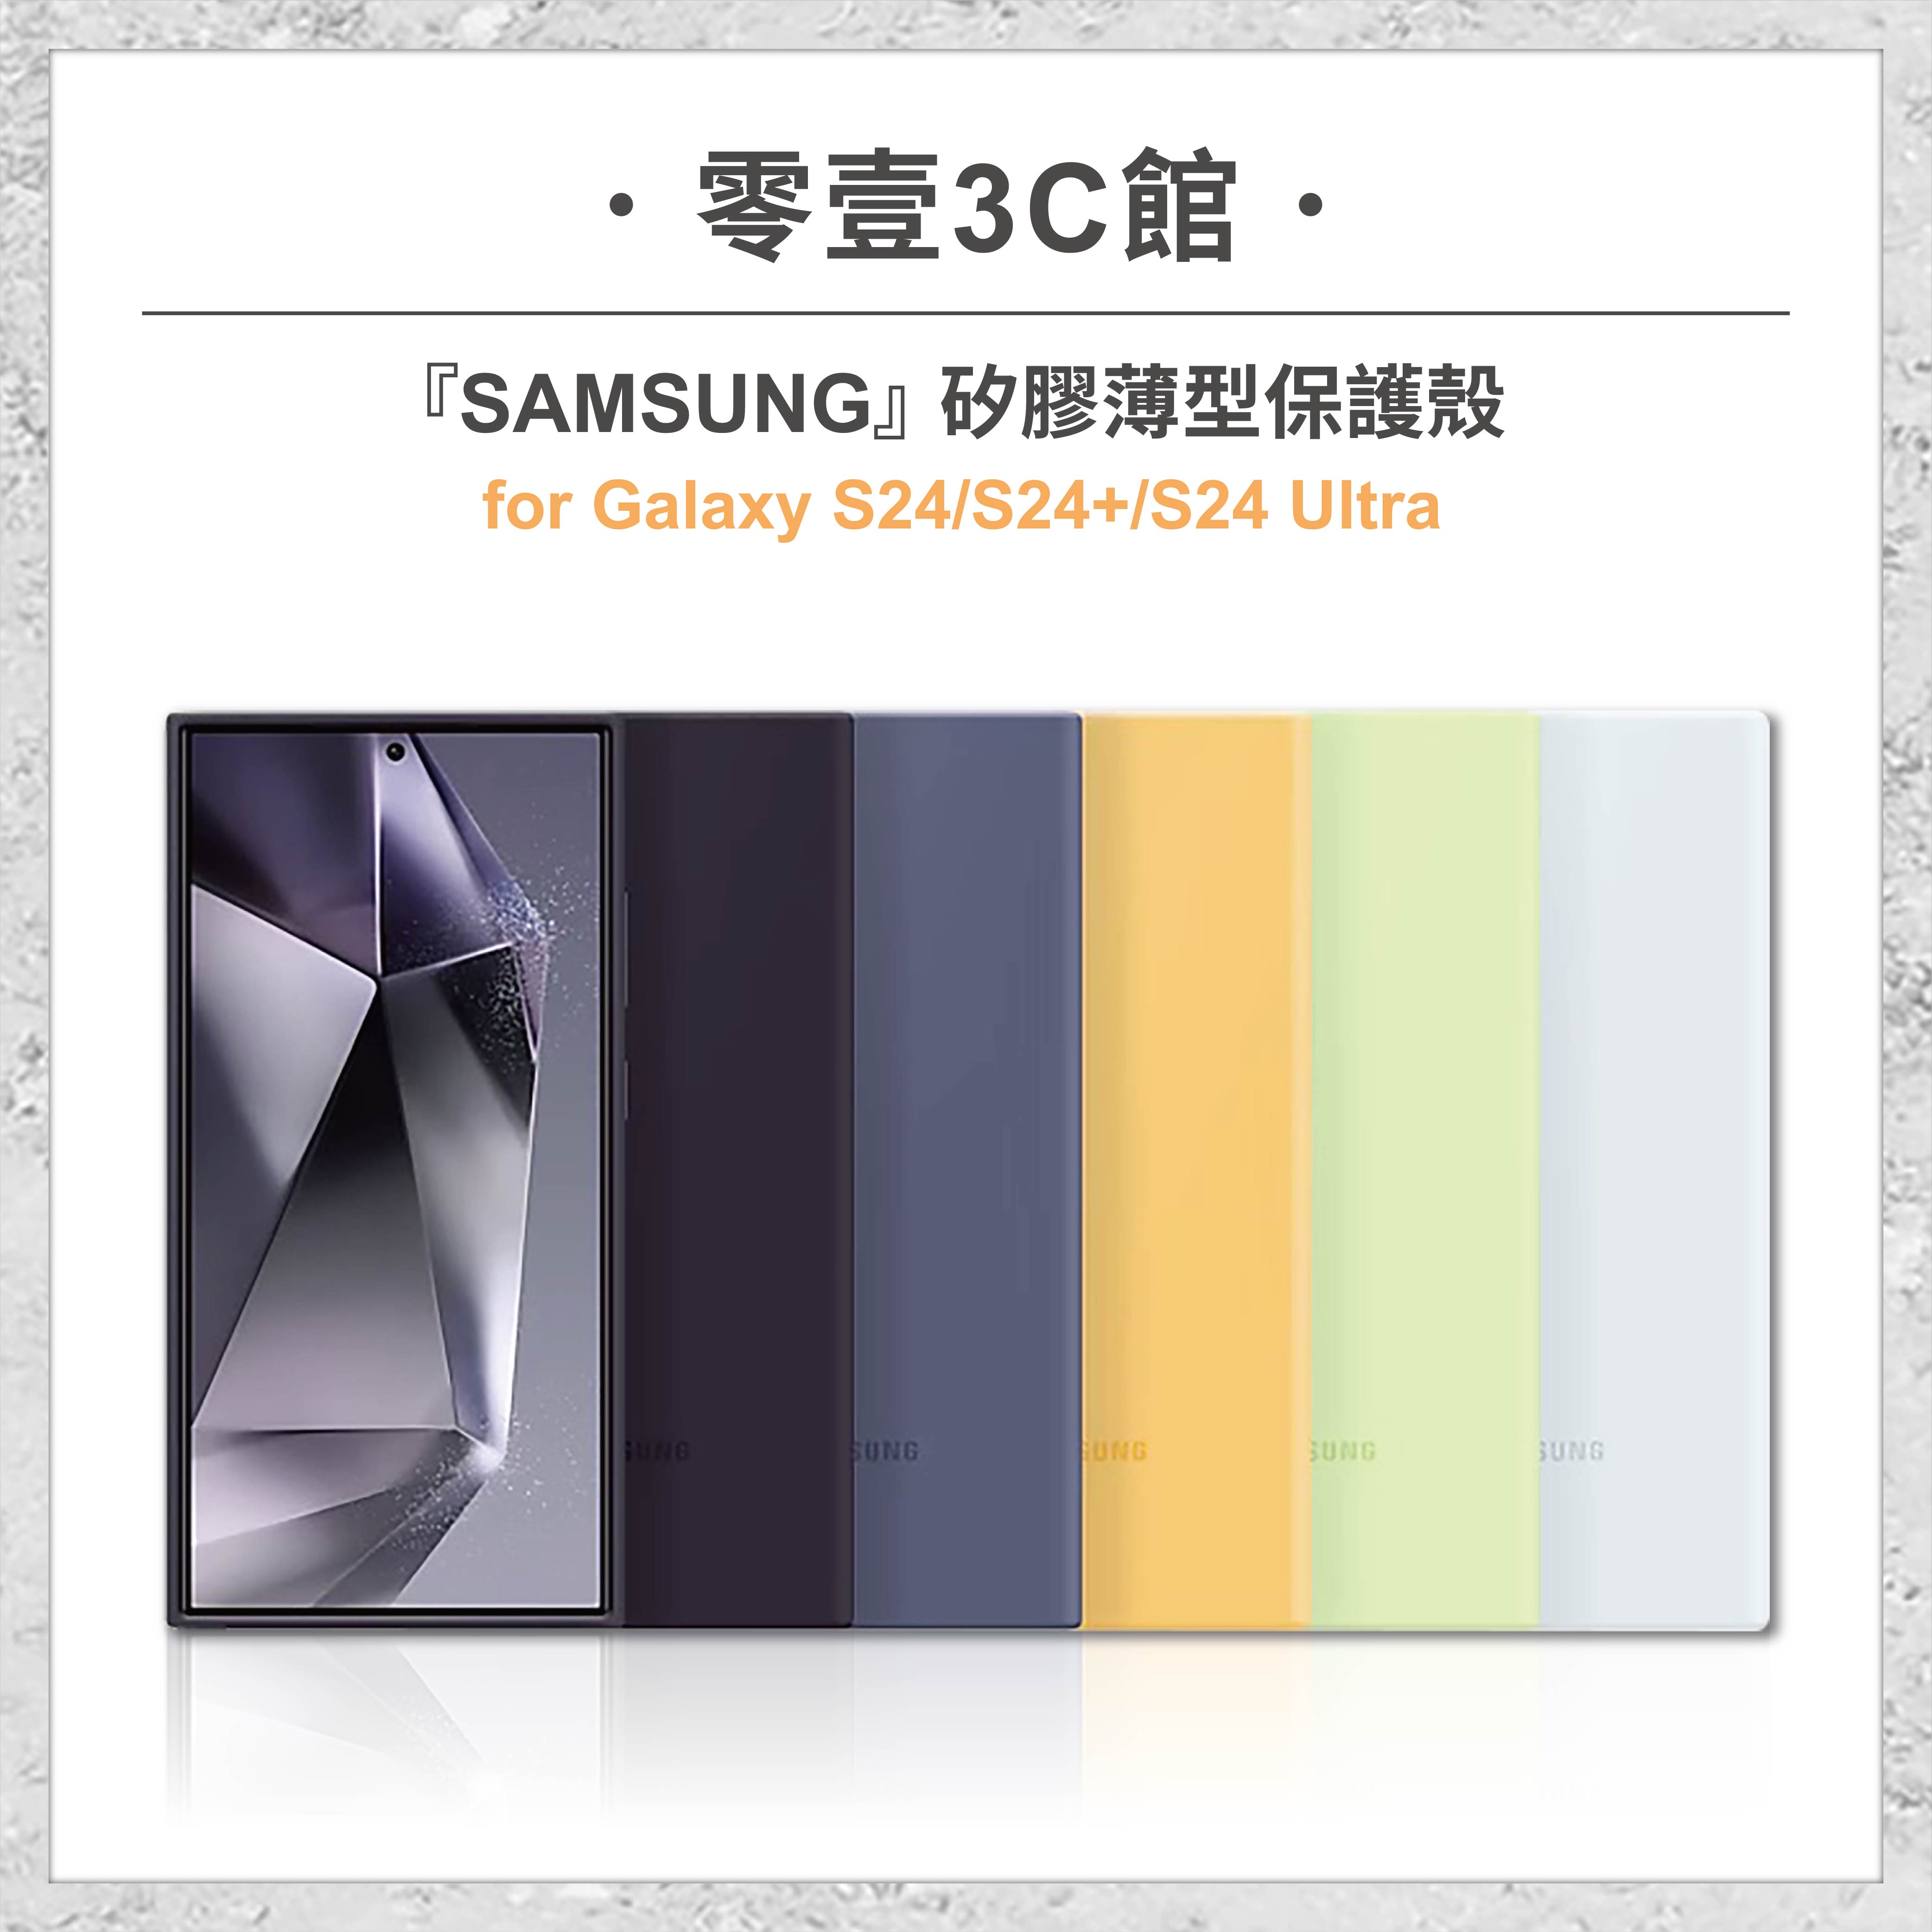 『SAMSUNG』Galaxy S24/S24+/S24 Ultra 矽膠薄型保護殼 手機殼